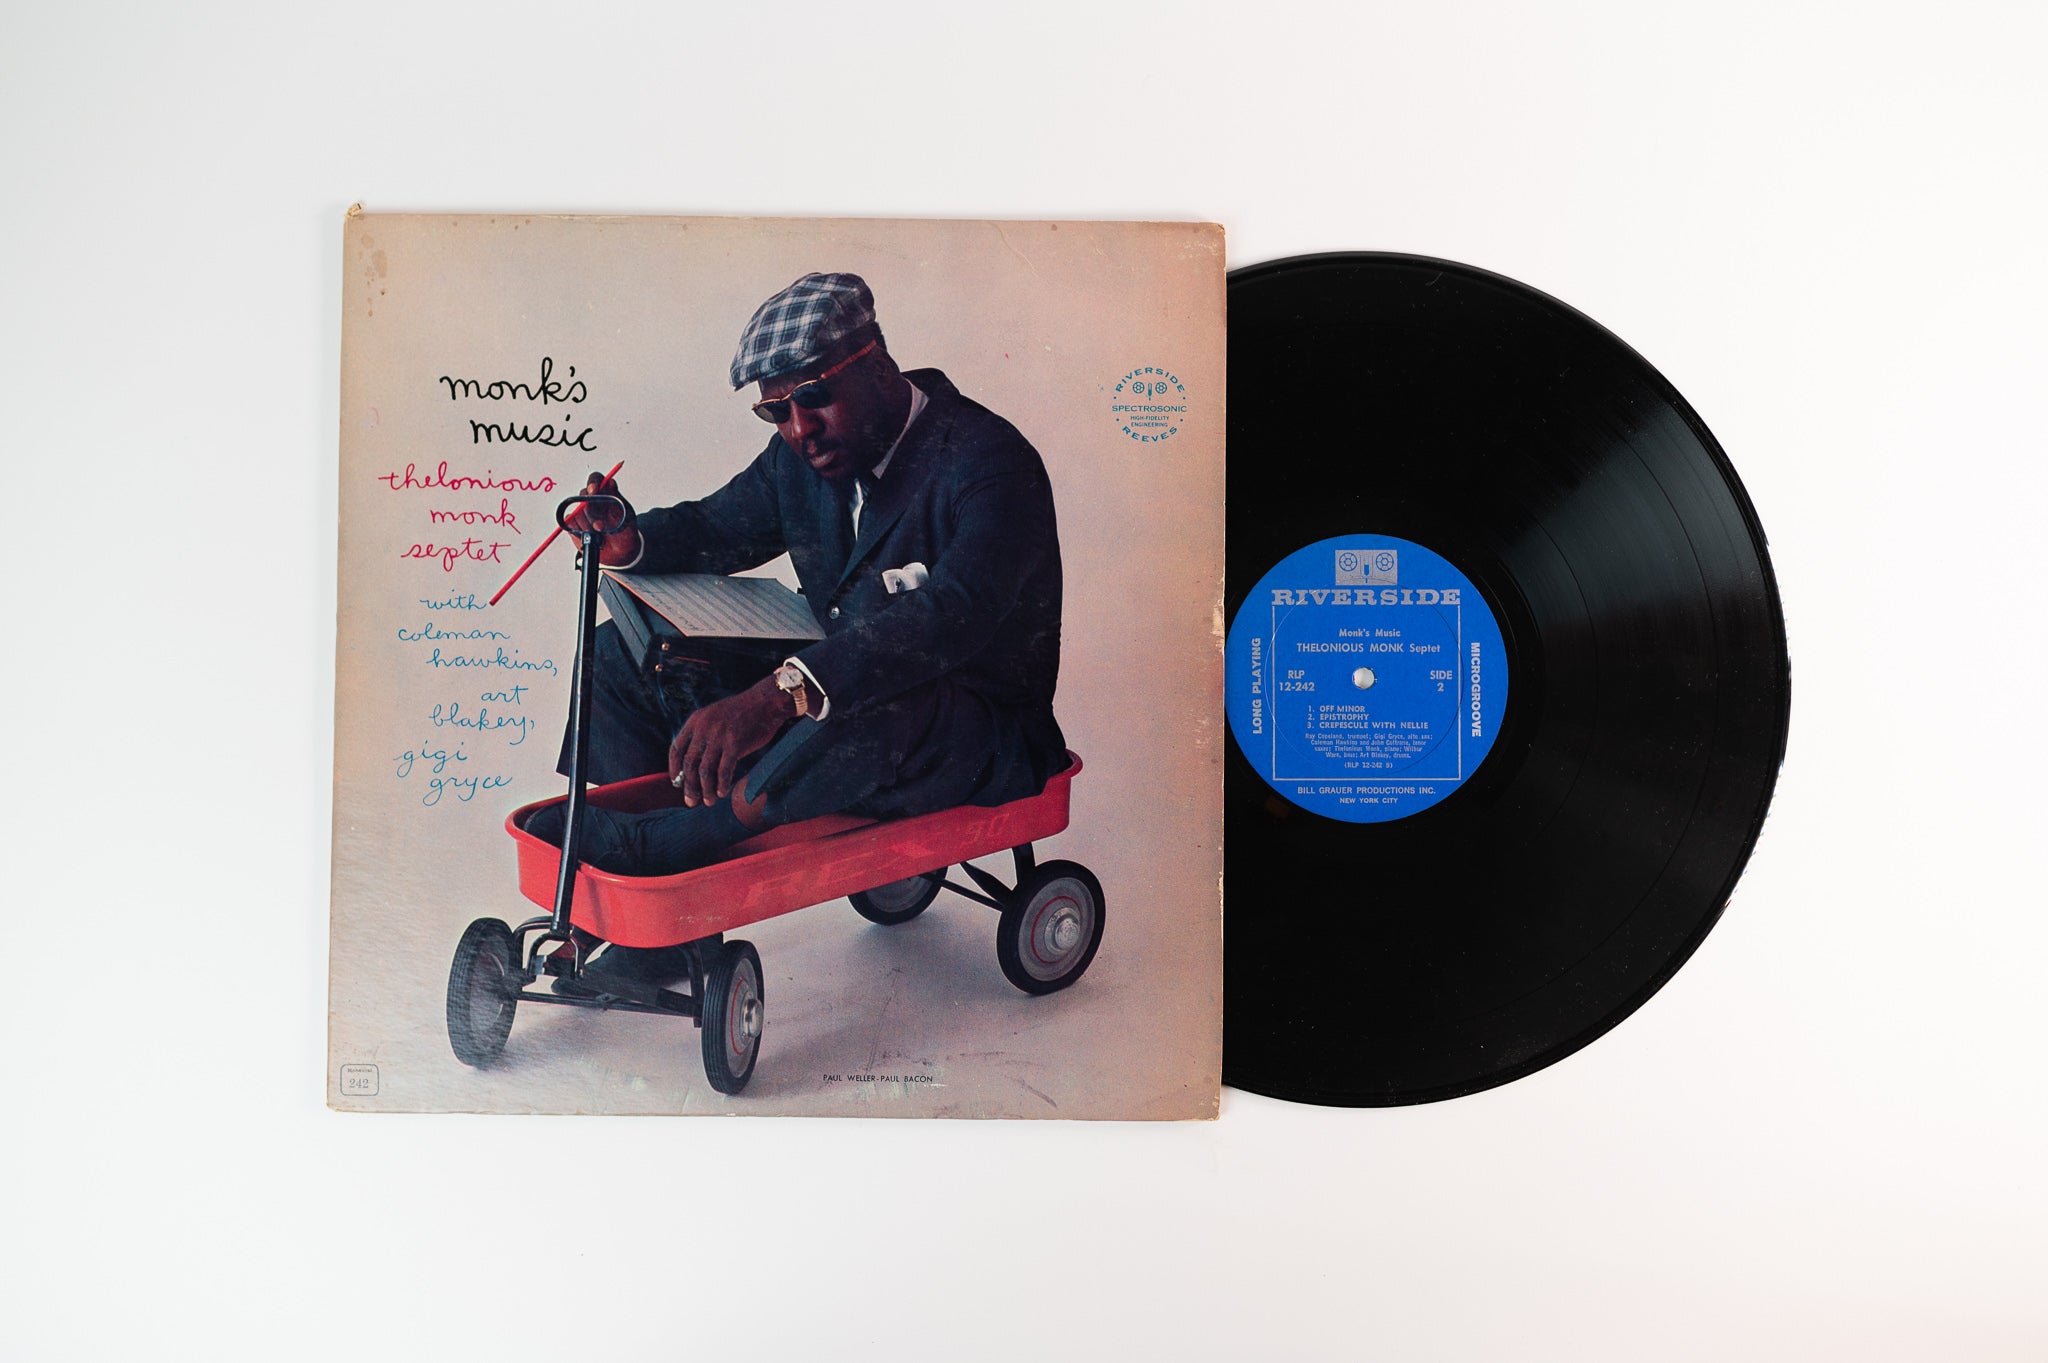 Thelonious Monk Septet - Monk's Music on Riverside Mono Reissue